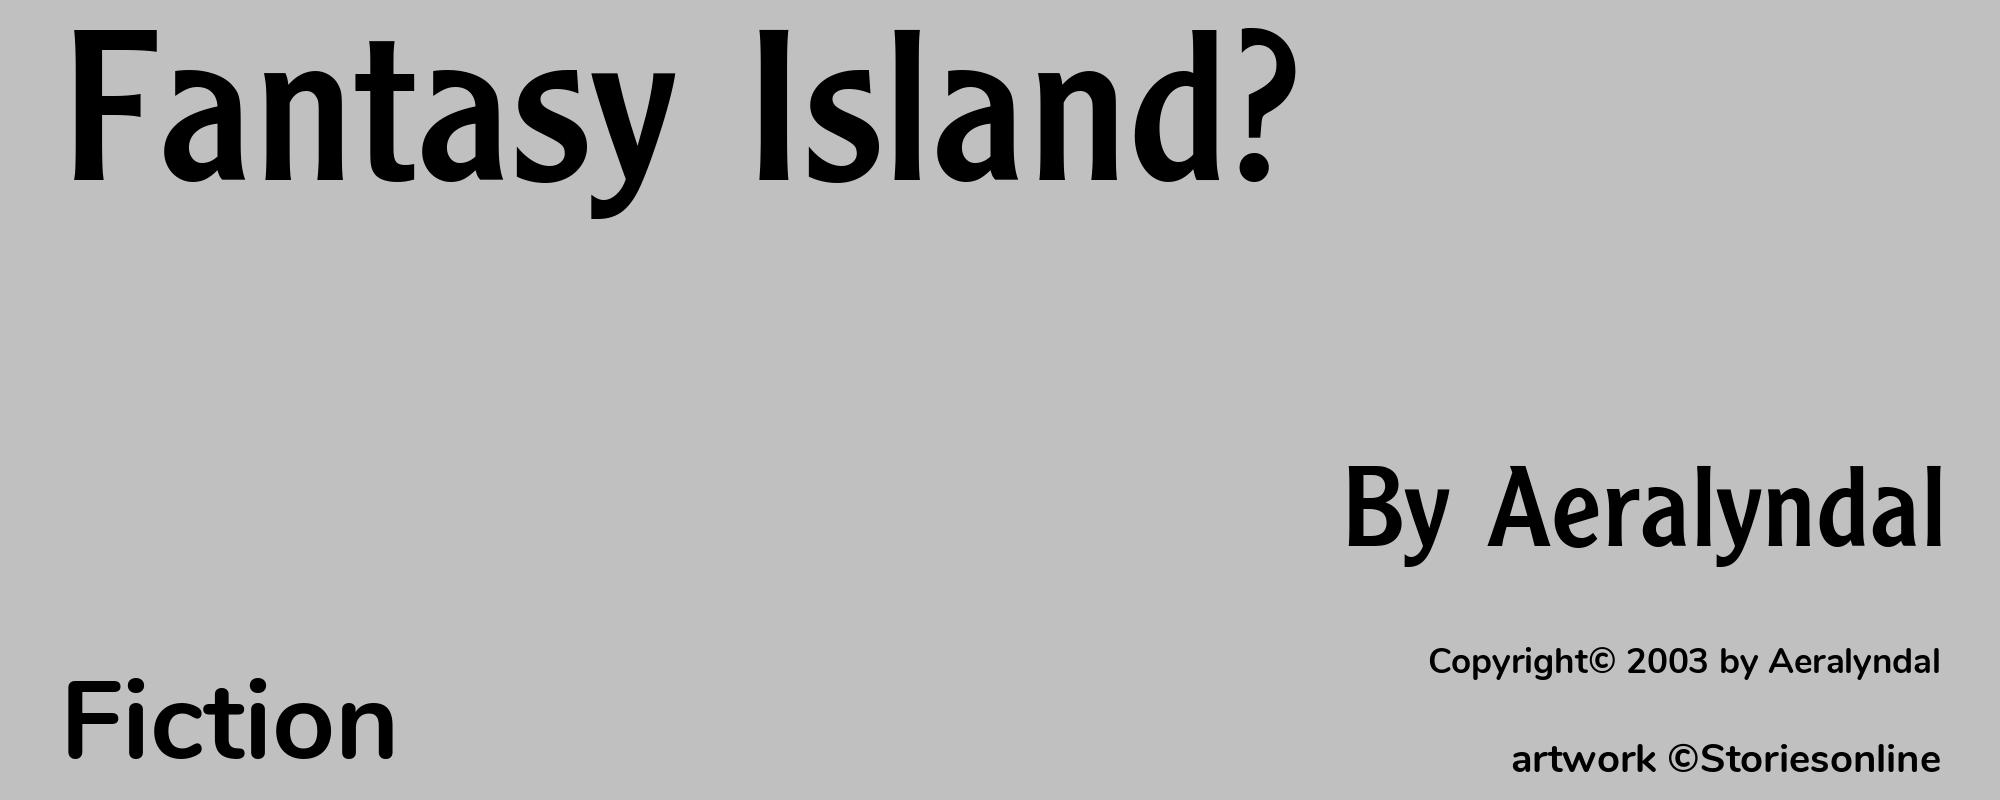 Fantasy Island? - Cover